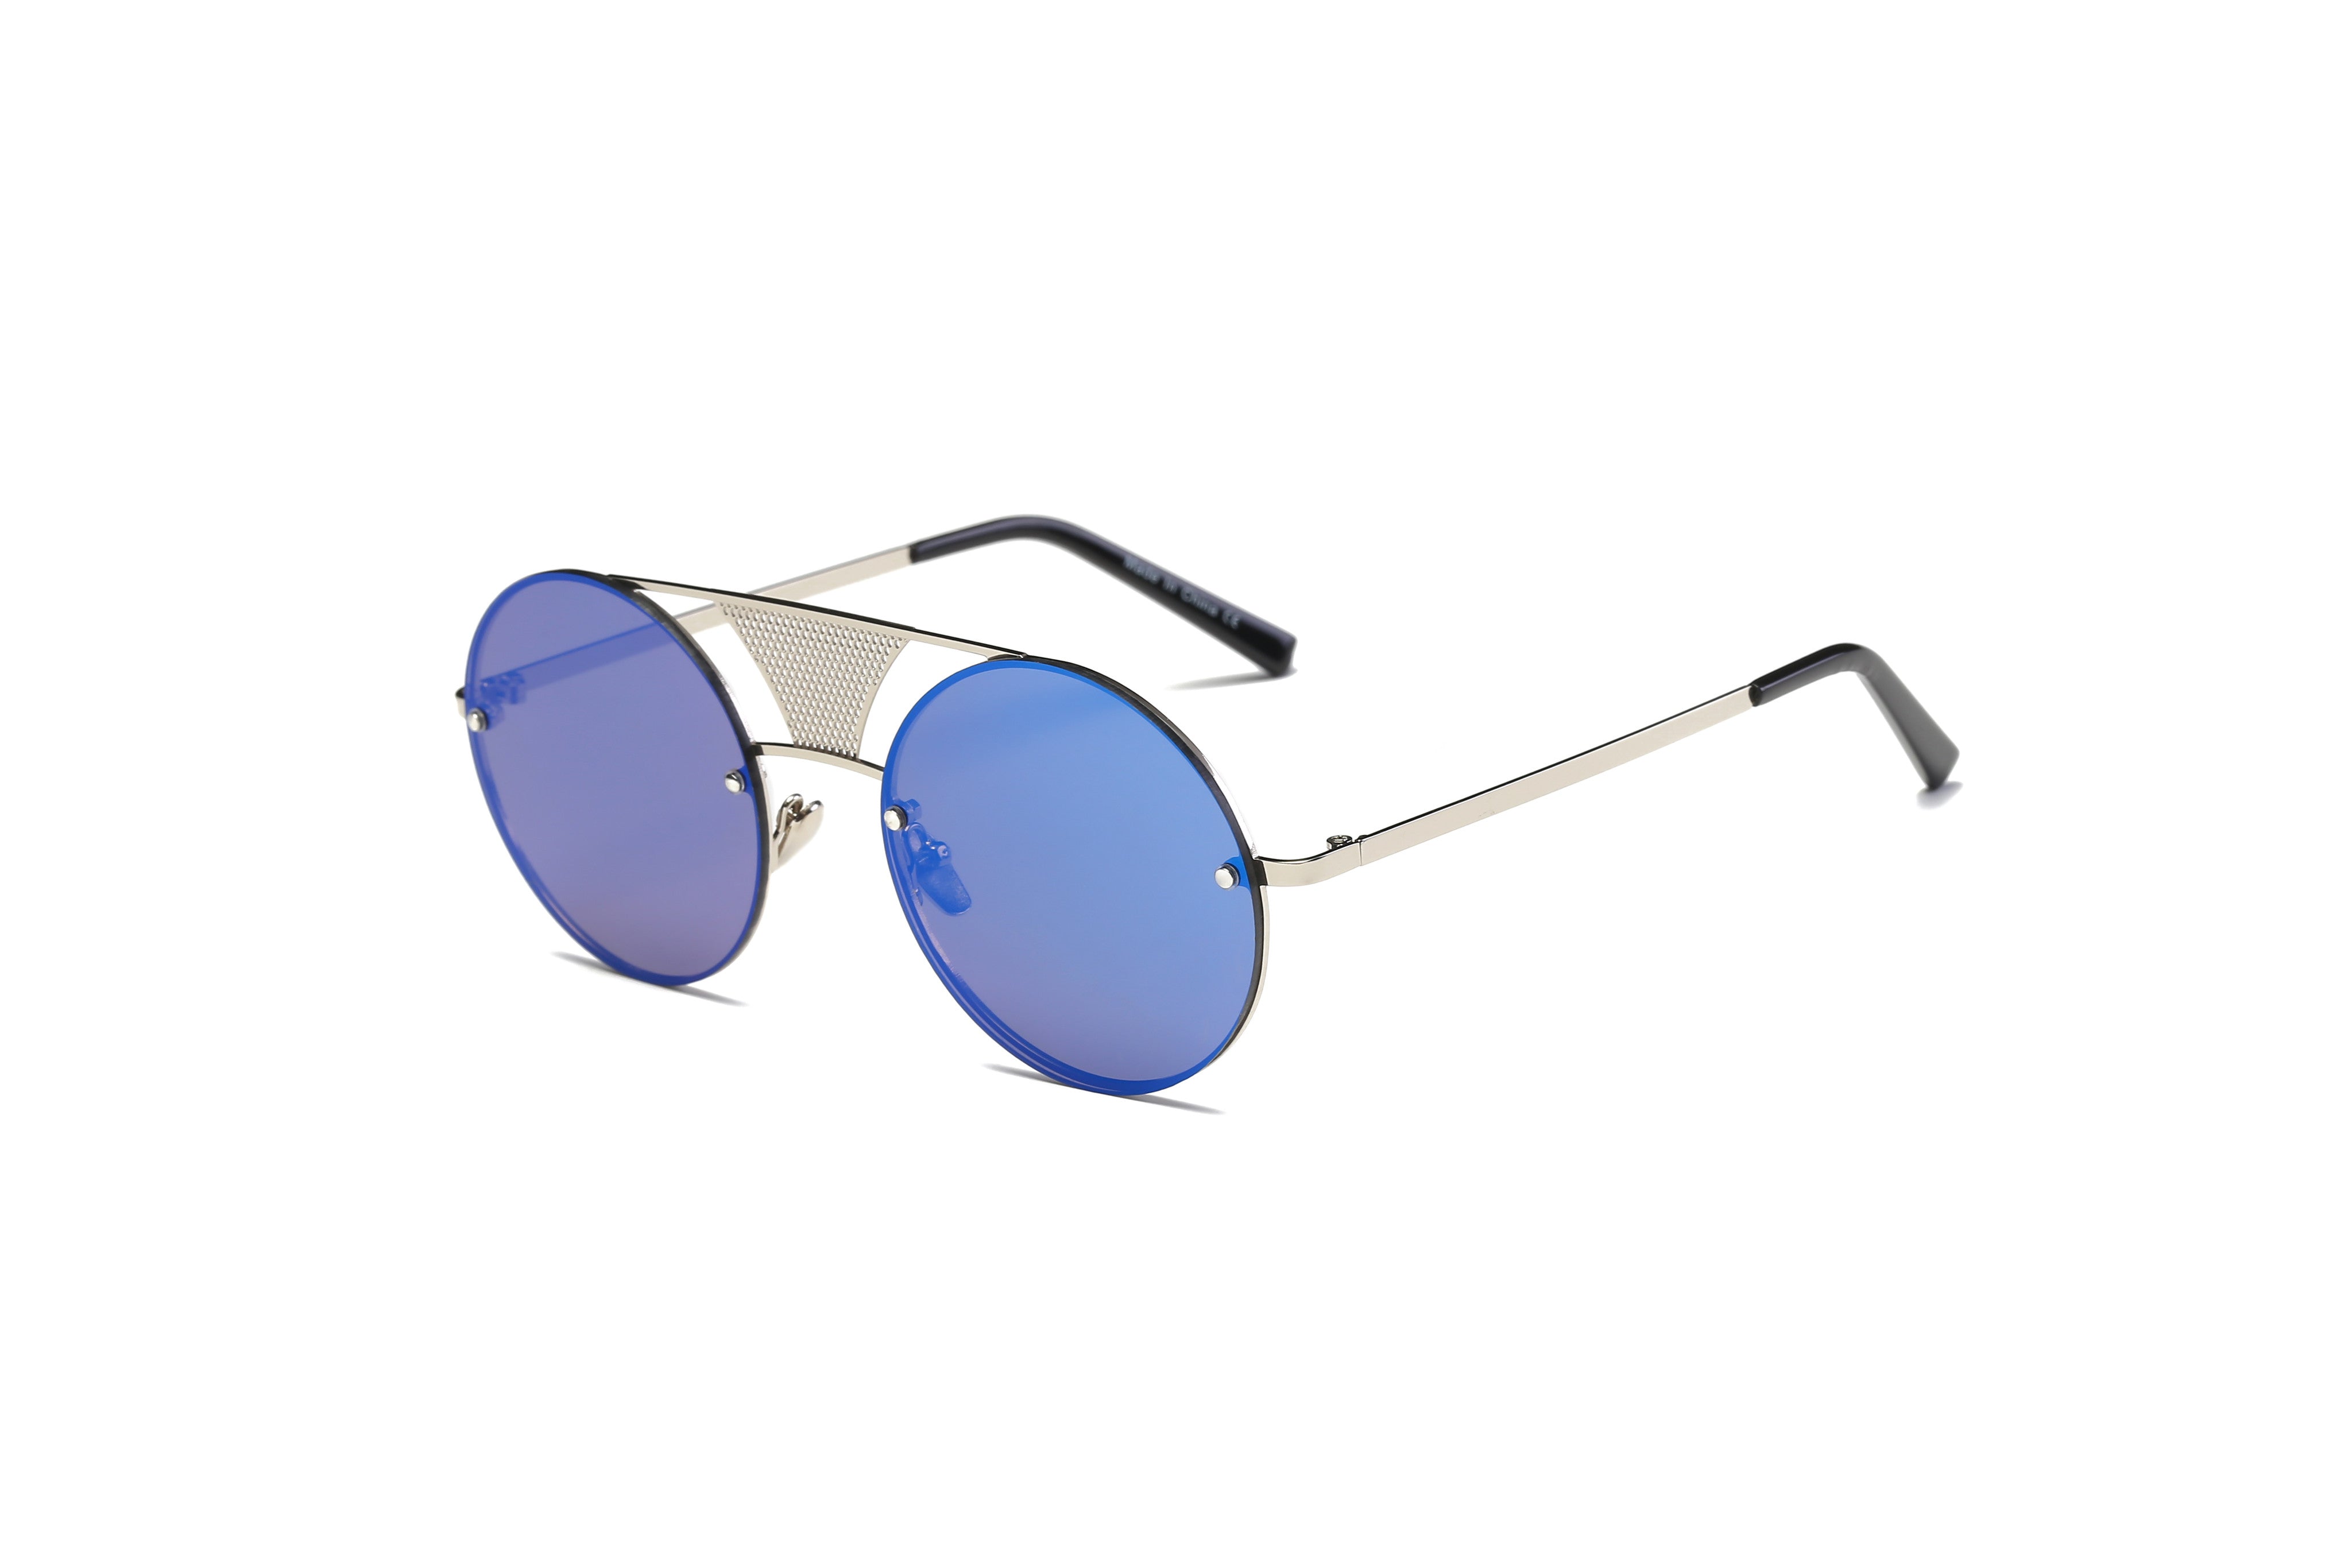 S2012 - Retro Round Brow-Bar Circle Fashion Wholesale Sunglasses Silver FRAME - Blue Lens